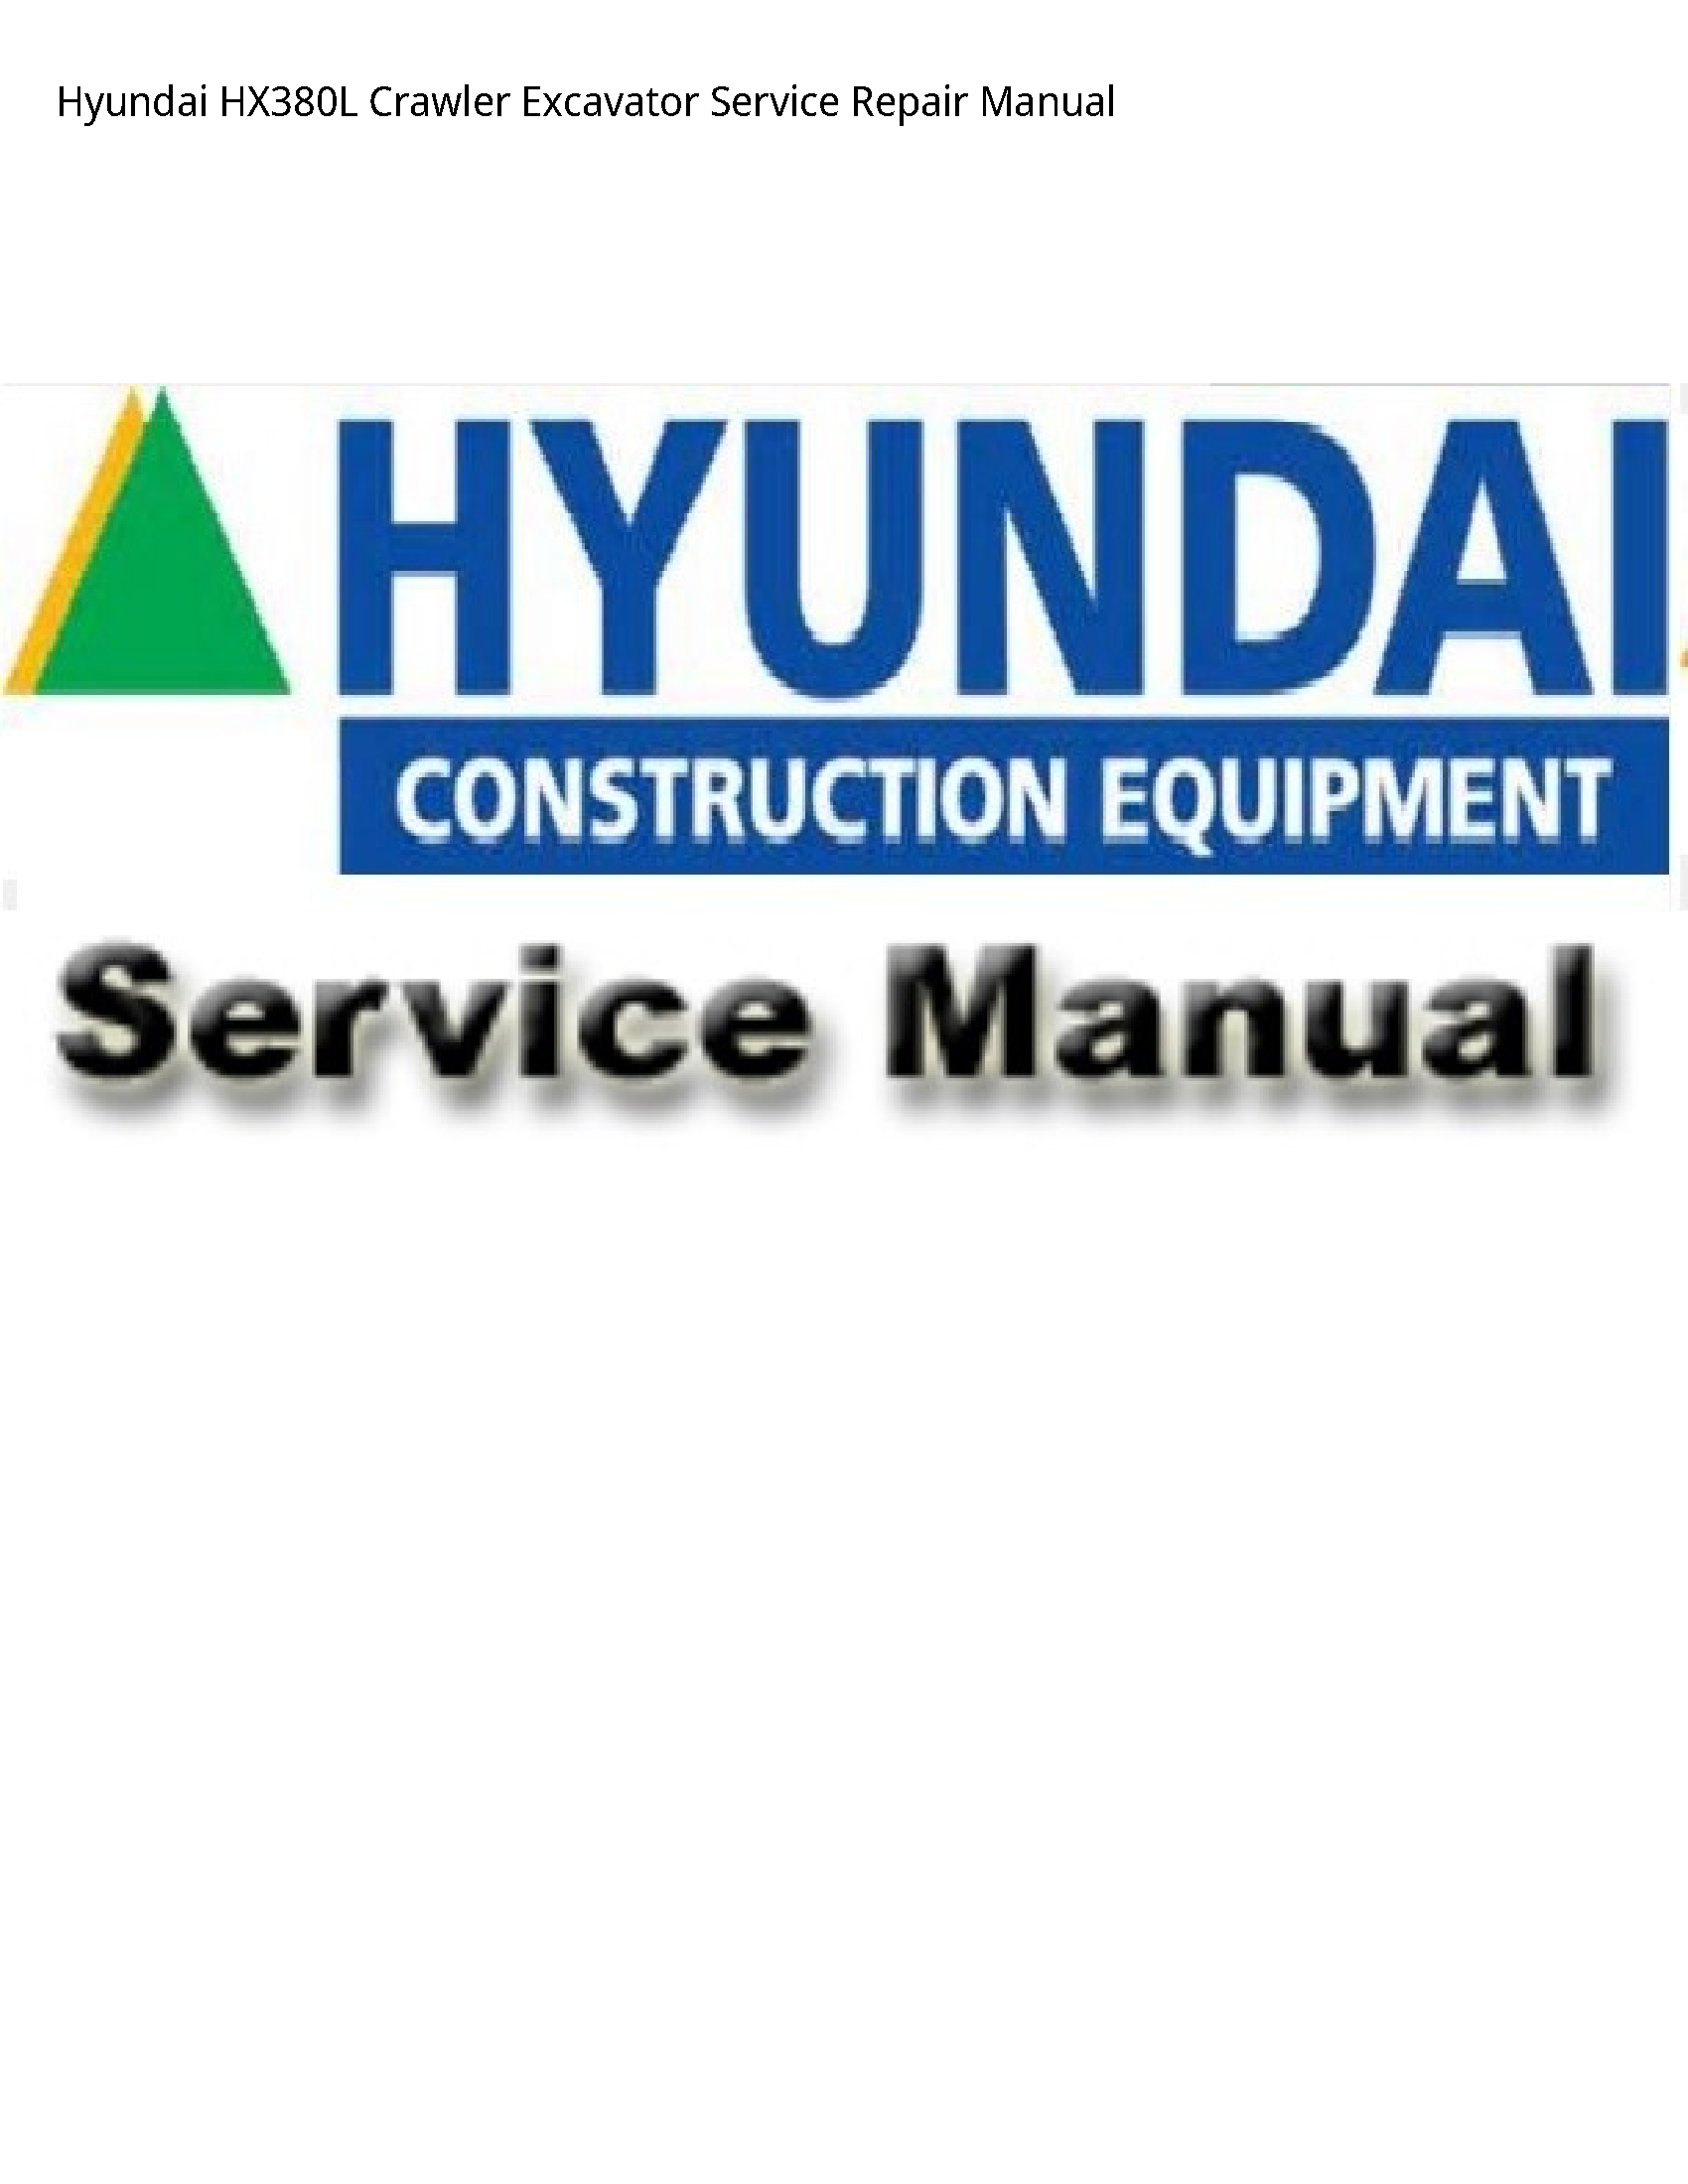 Hyundai HX380L Crawler Excavator manual